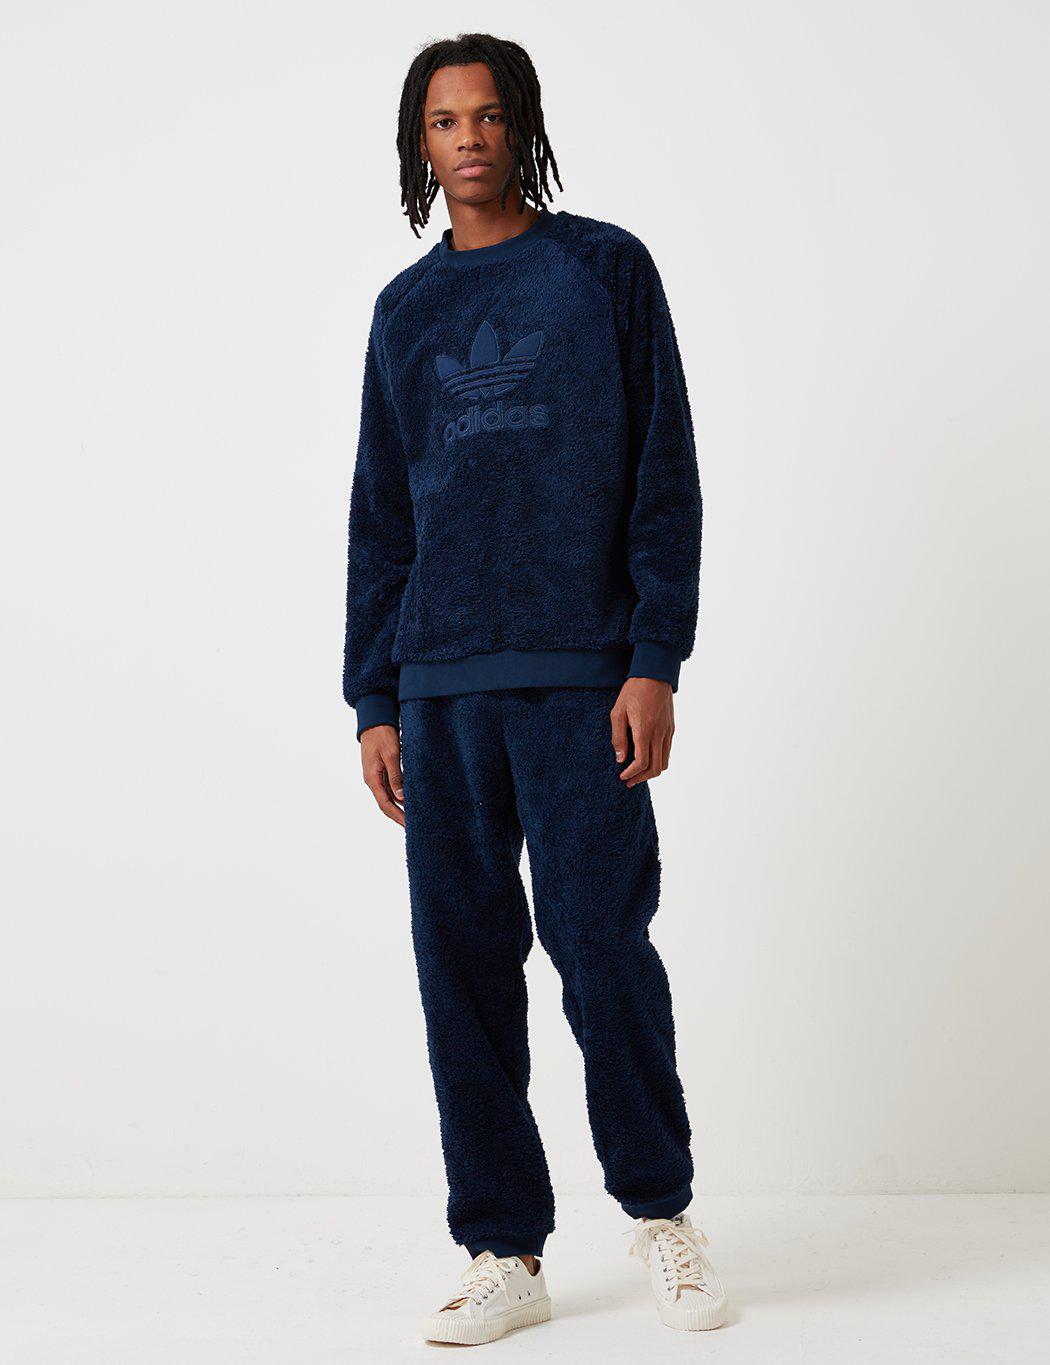 adidas Originals Synthetic Adidas Winterized Crew Neck Sweatshirt in Navy  (Blue) for Men - Lyst